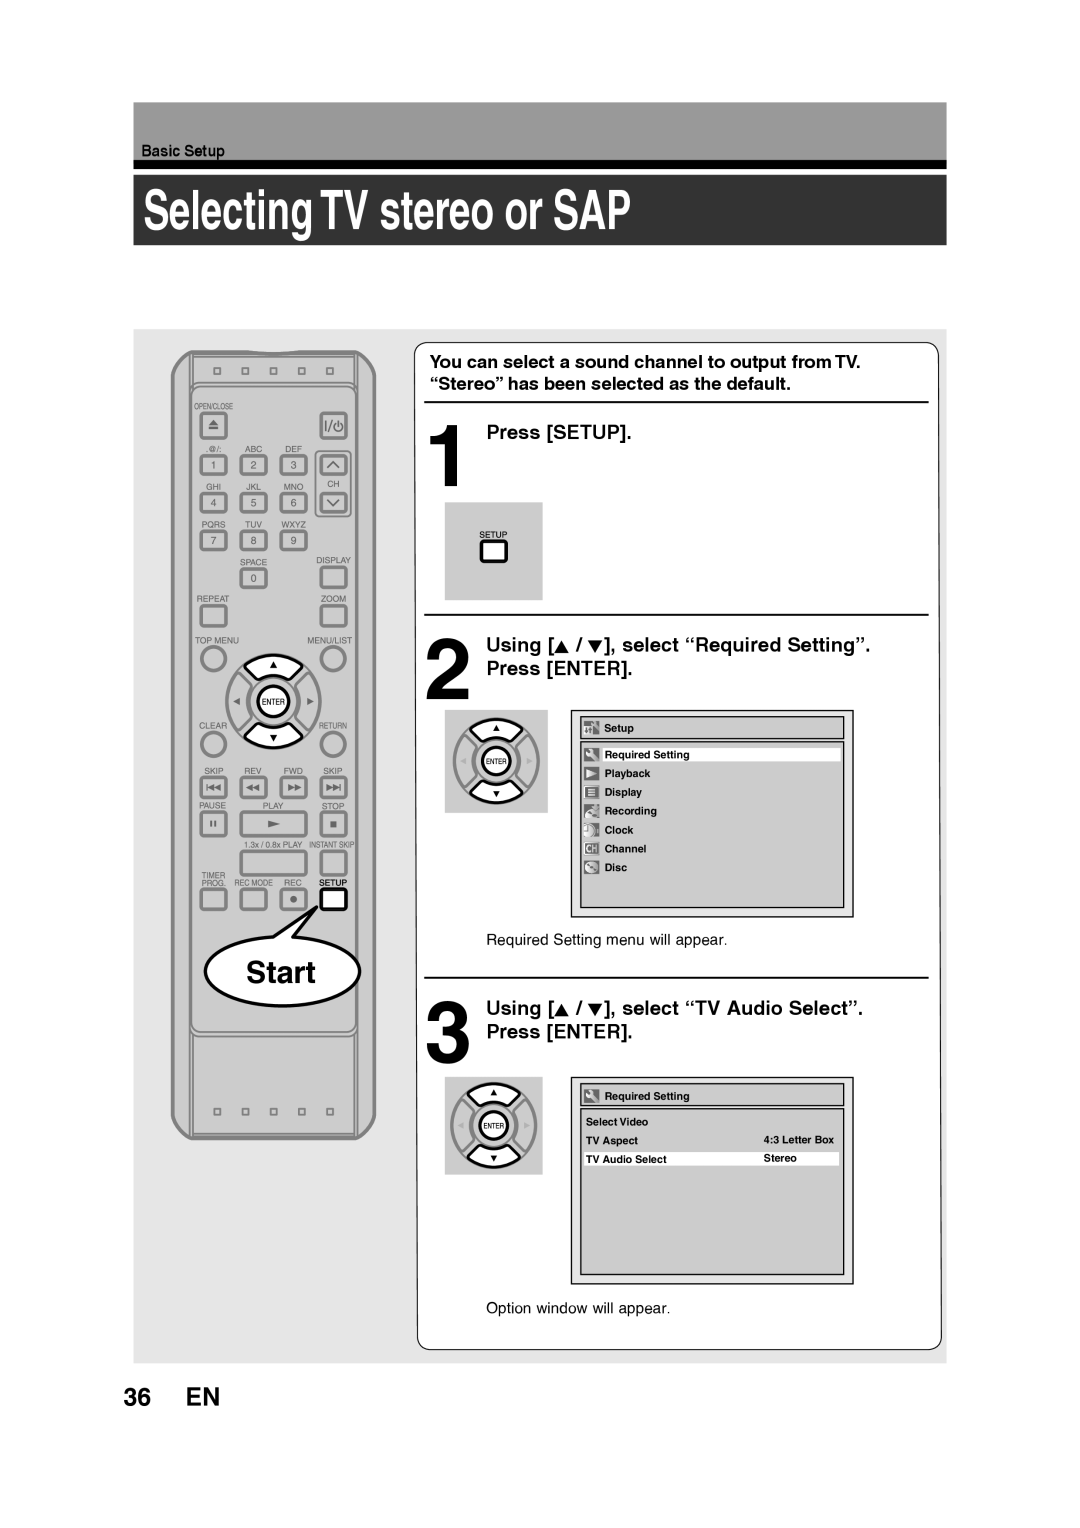 Toshiba D-RW2SU/D-RW2SC manual Selecting TV stereo or SAP, 36 EN, Using K / L, select “TV Audio Select” Press ENTER, Start 